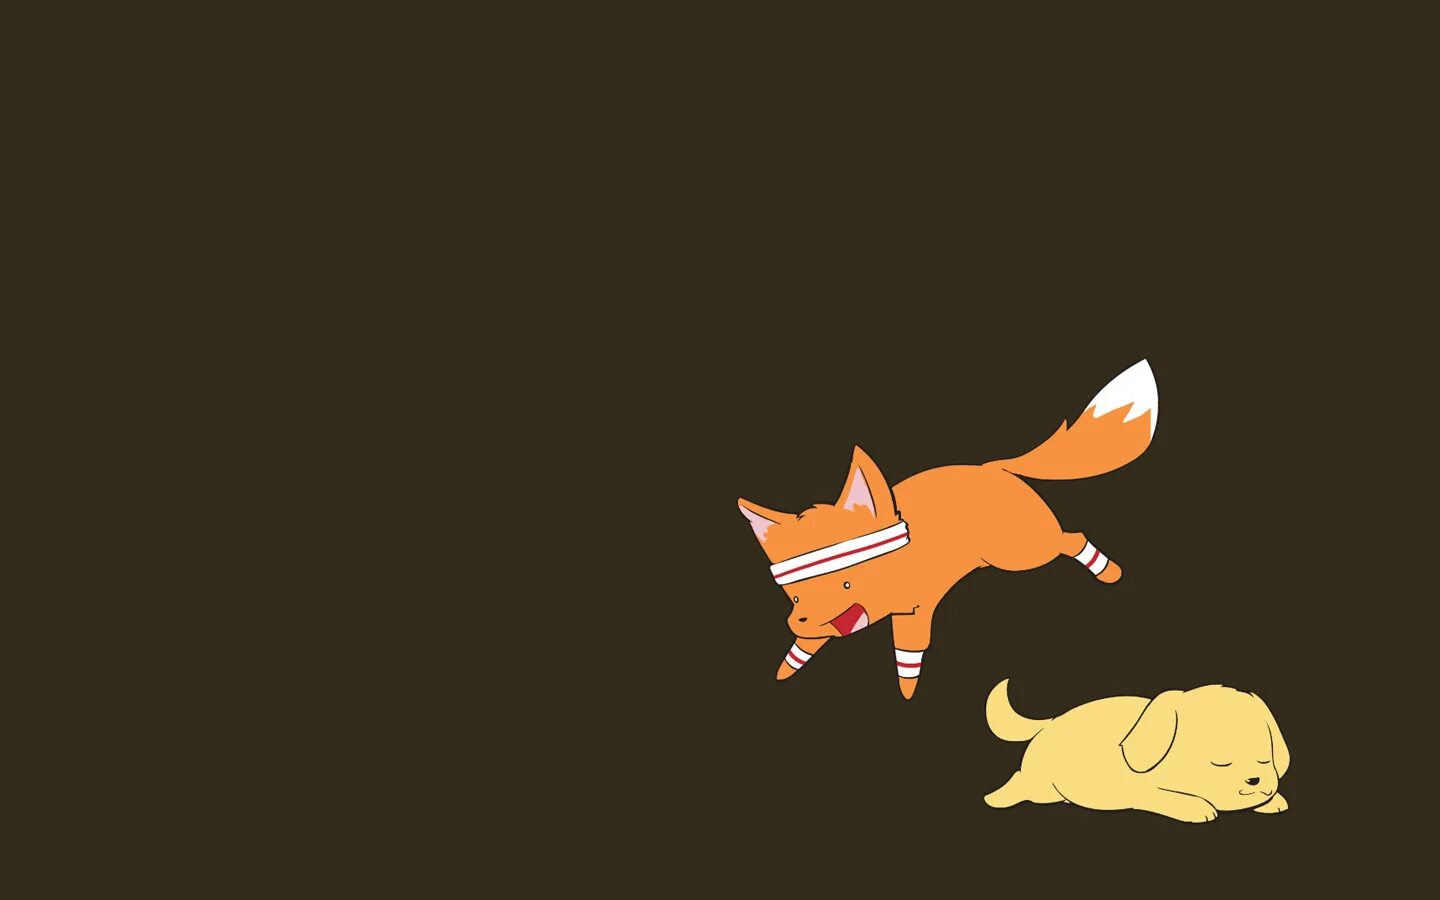 The quick brown fox jump. Дерущуюся собаки рисунки в стиле Минимализм. The quick Brown Fox. Обои питомцы ПАБГ. Kinito Pet обои.